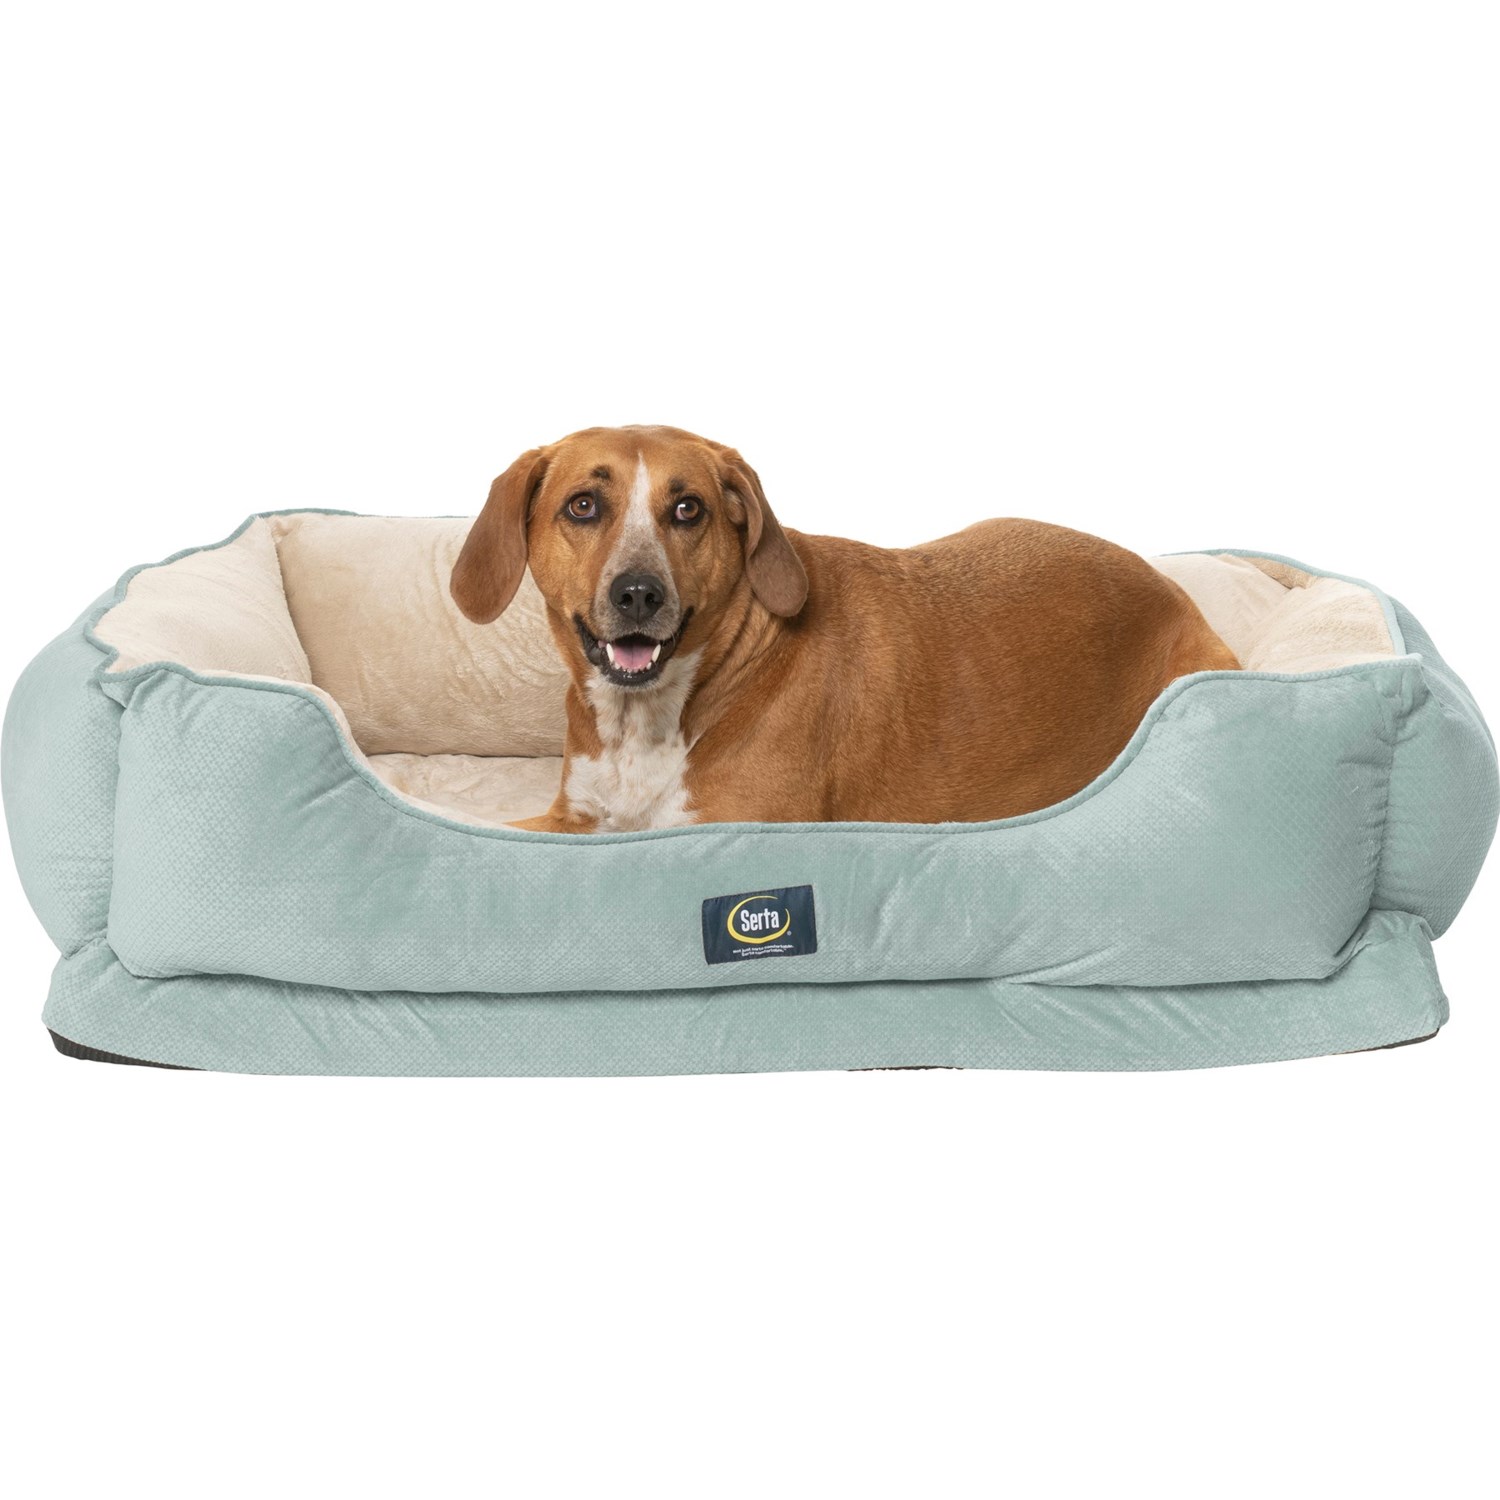 Serta Extra-Large Cuddler Dog Bed - 45x34”